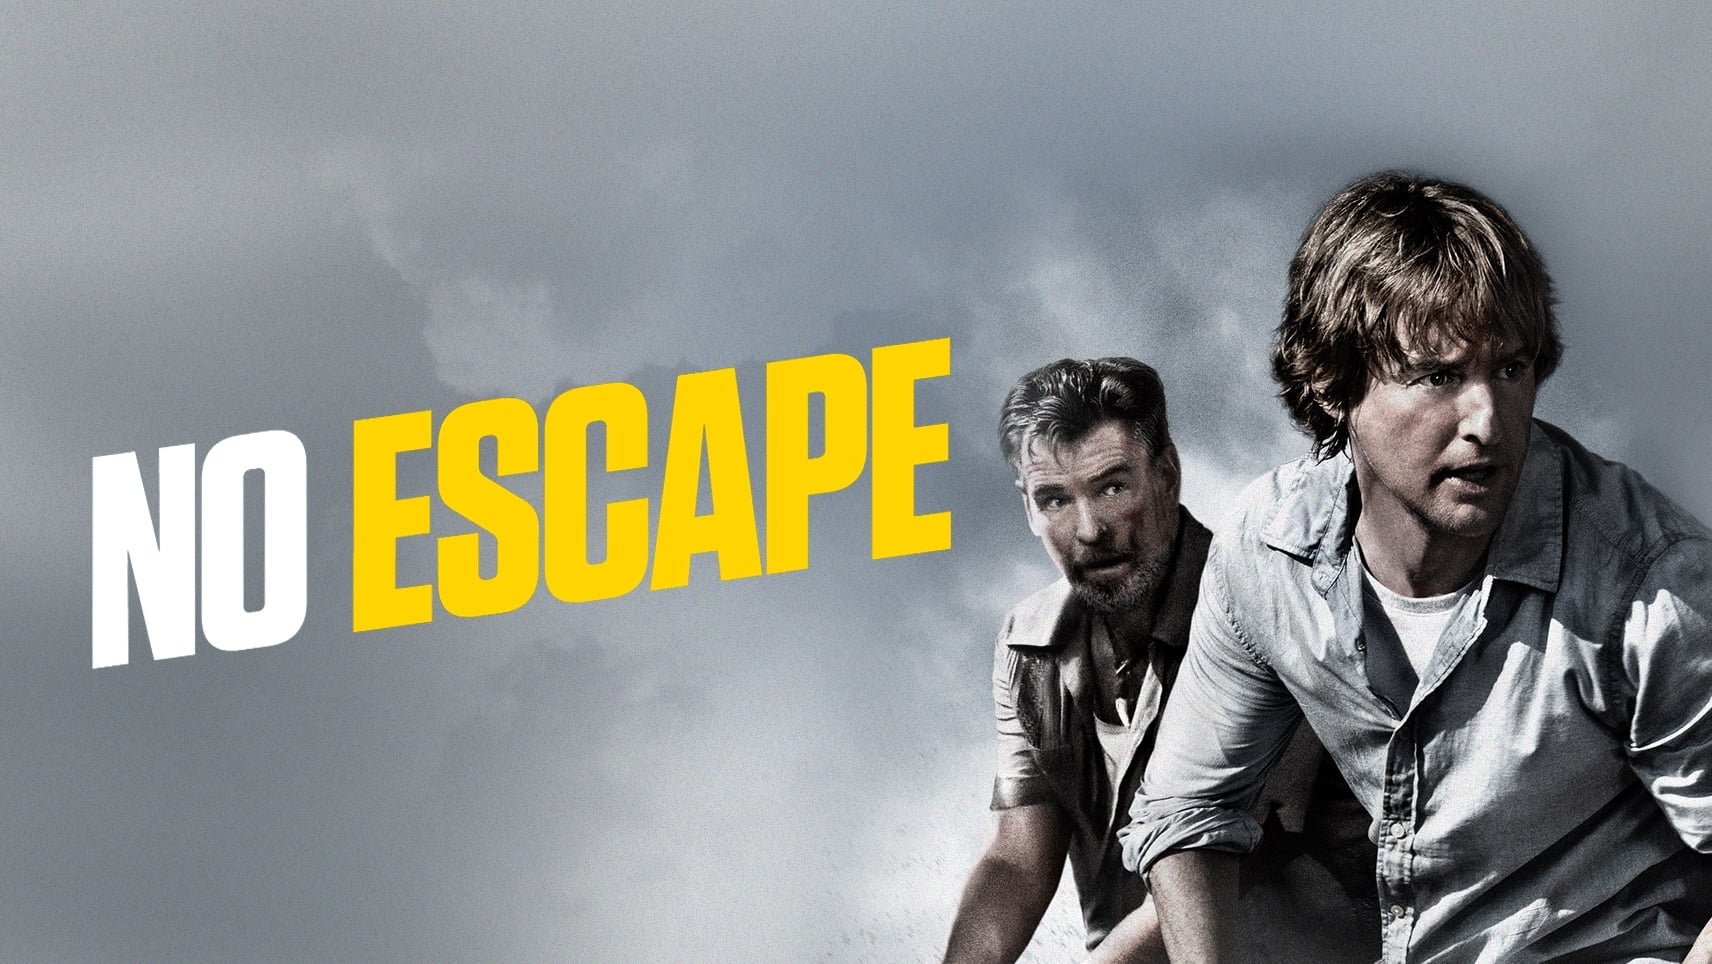 No escape - ei pakotietä (2015)